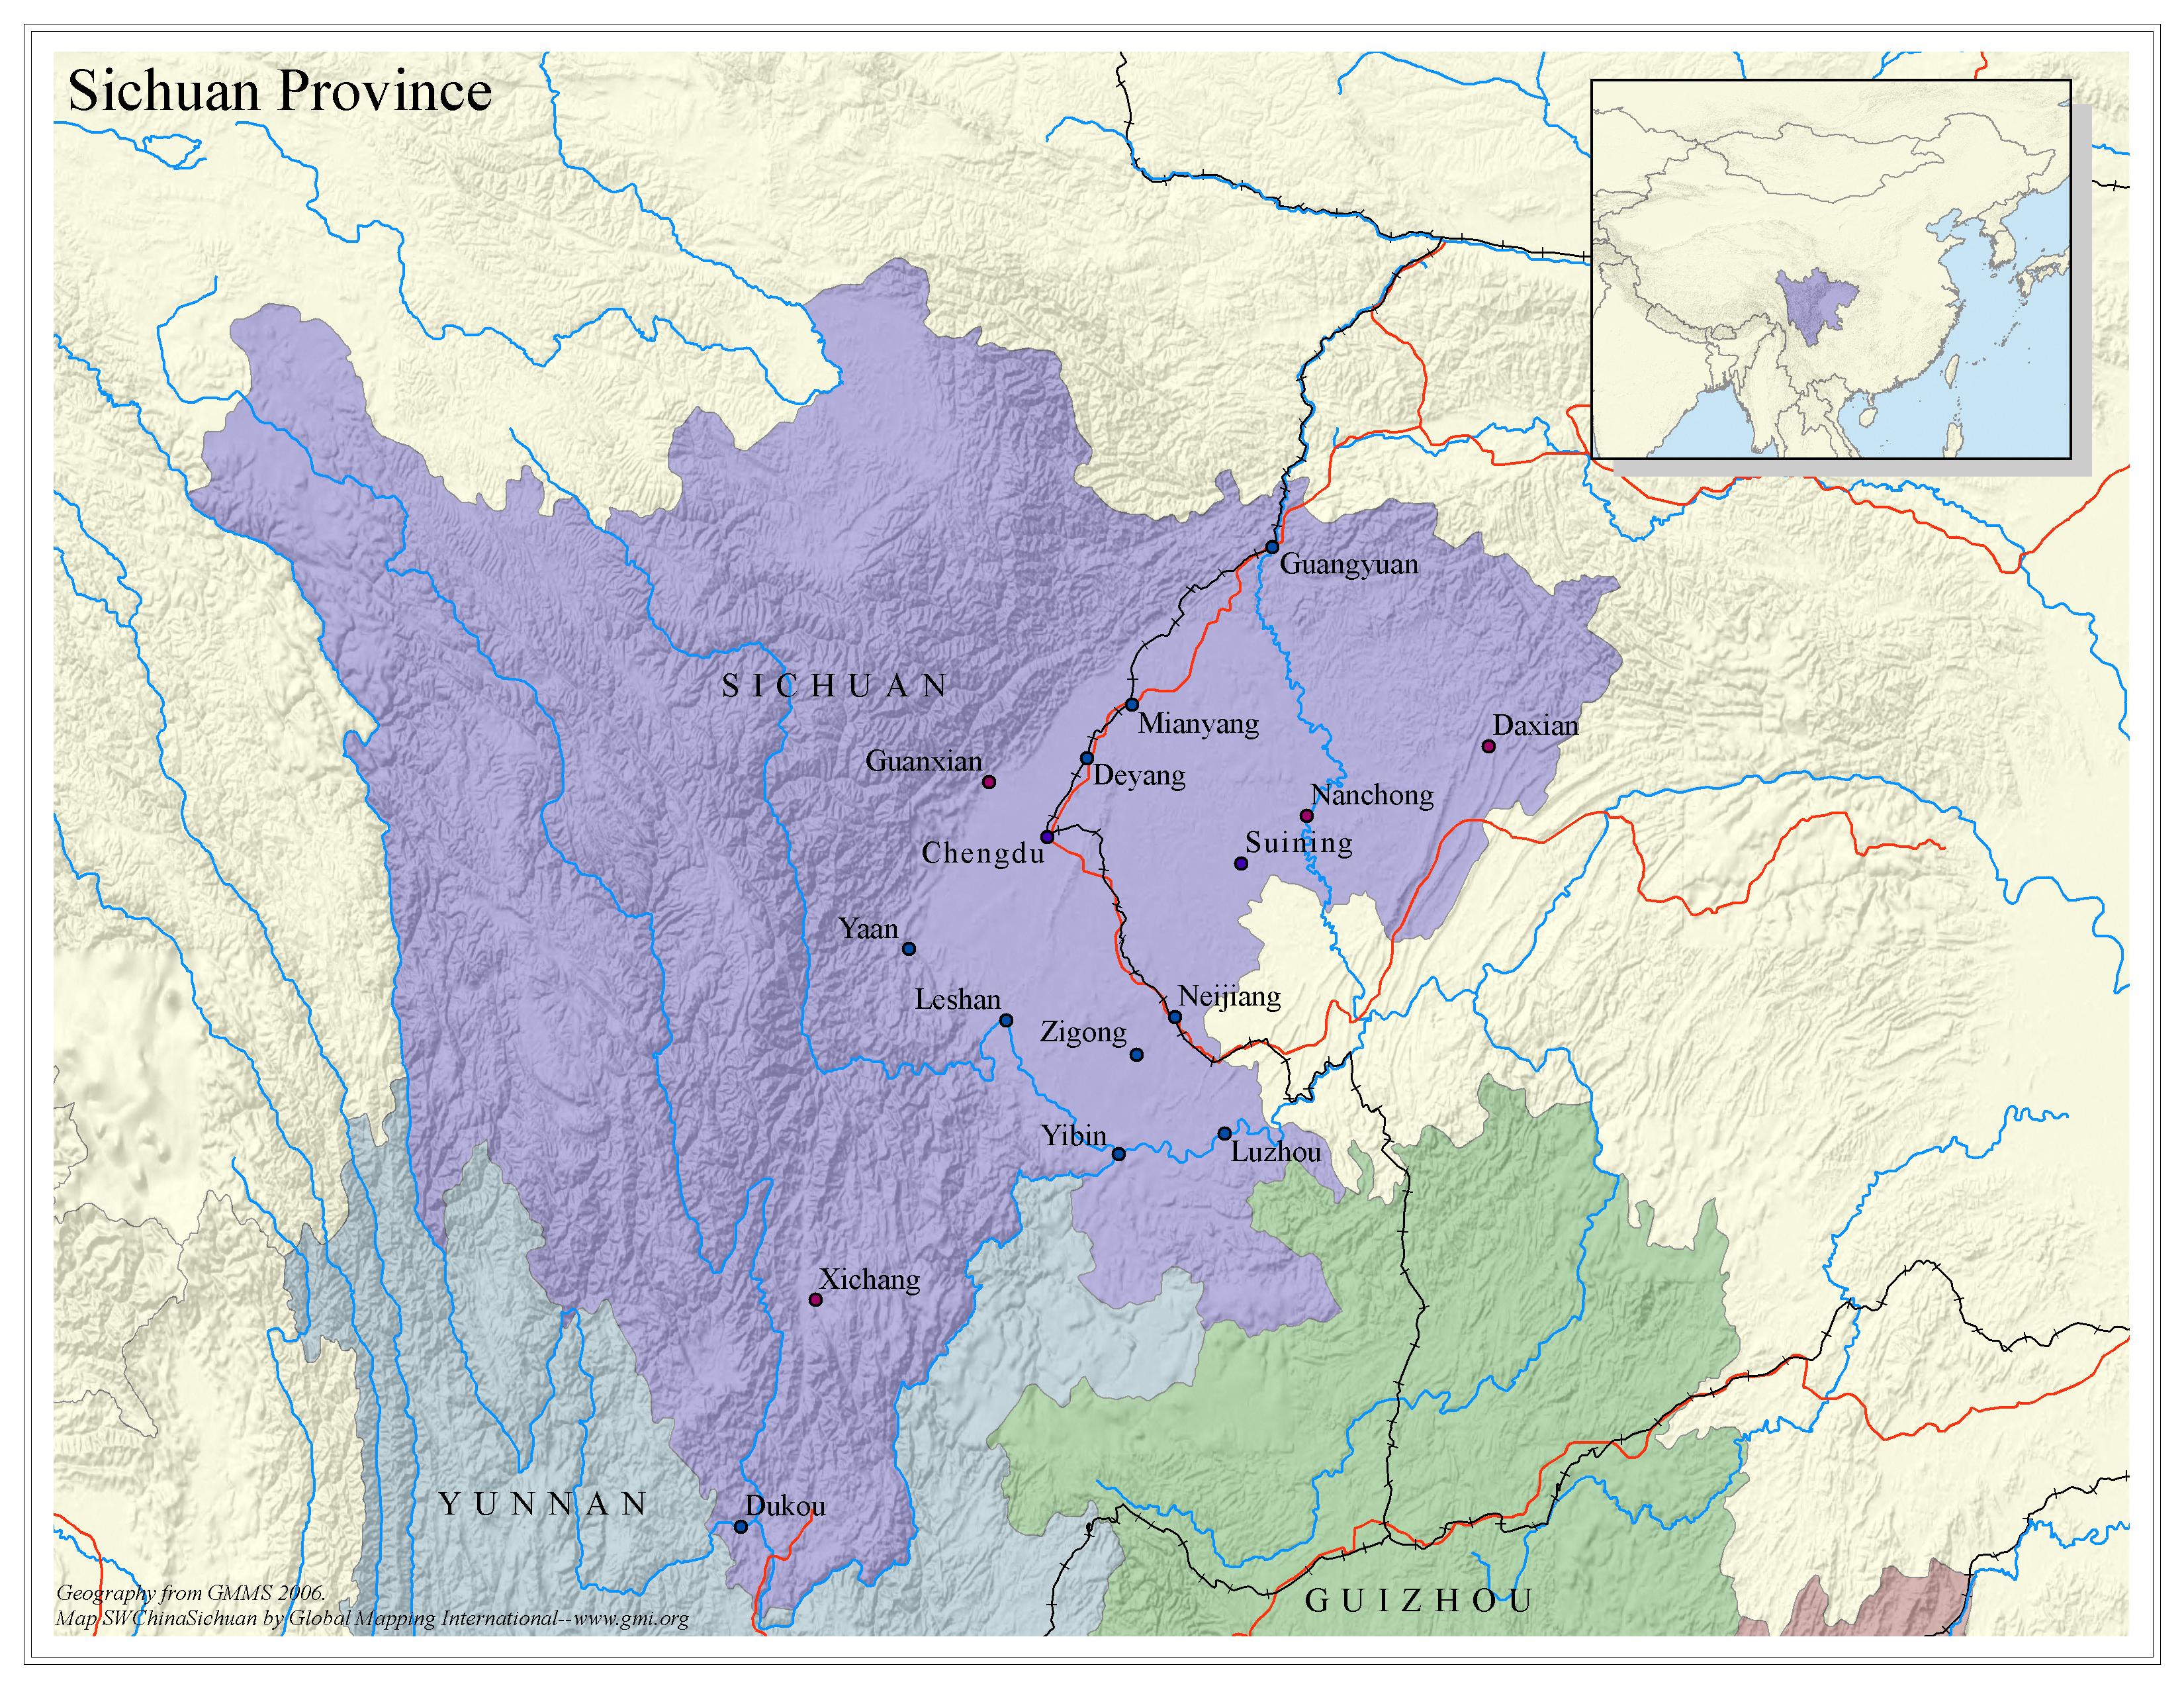 Sichuan Province - Political map